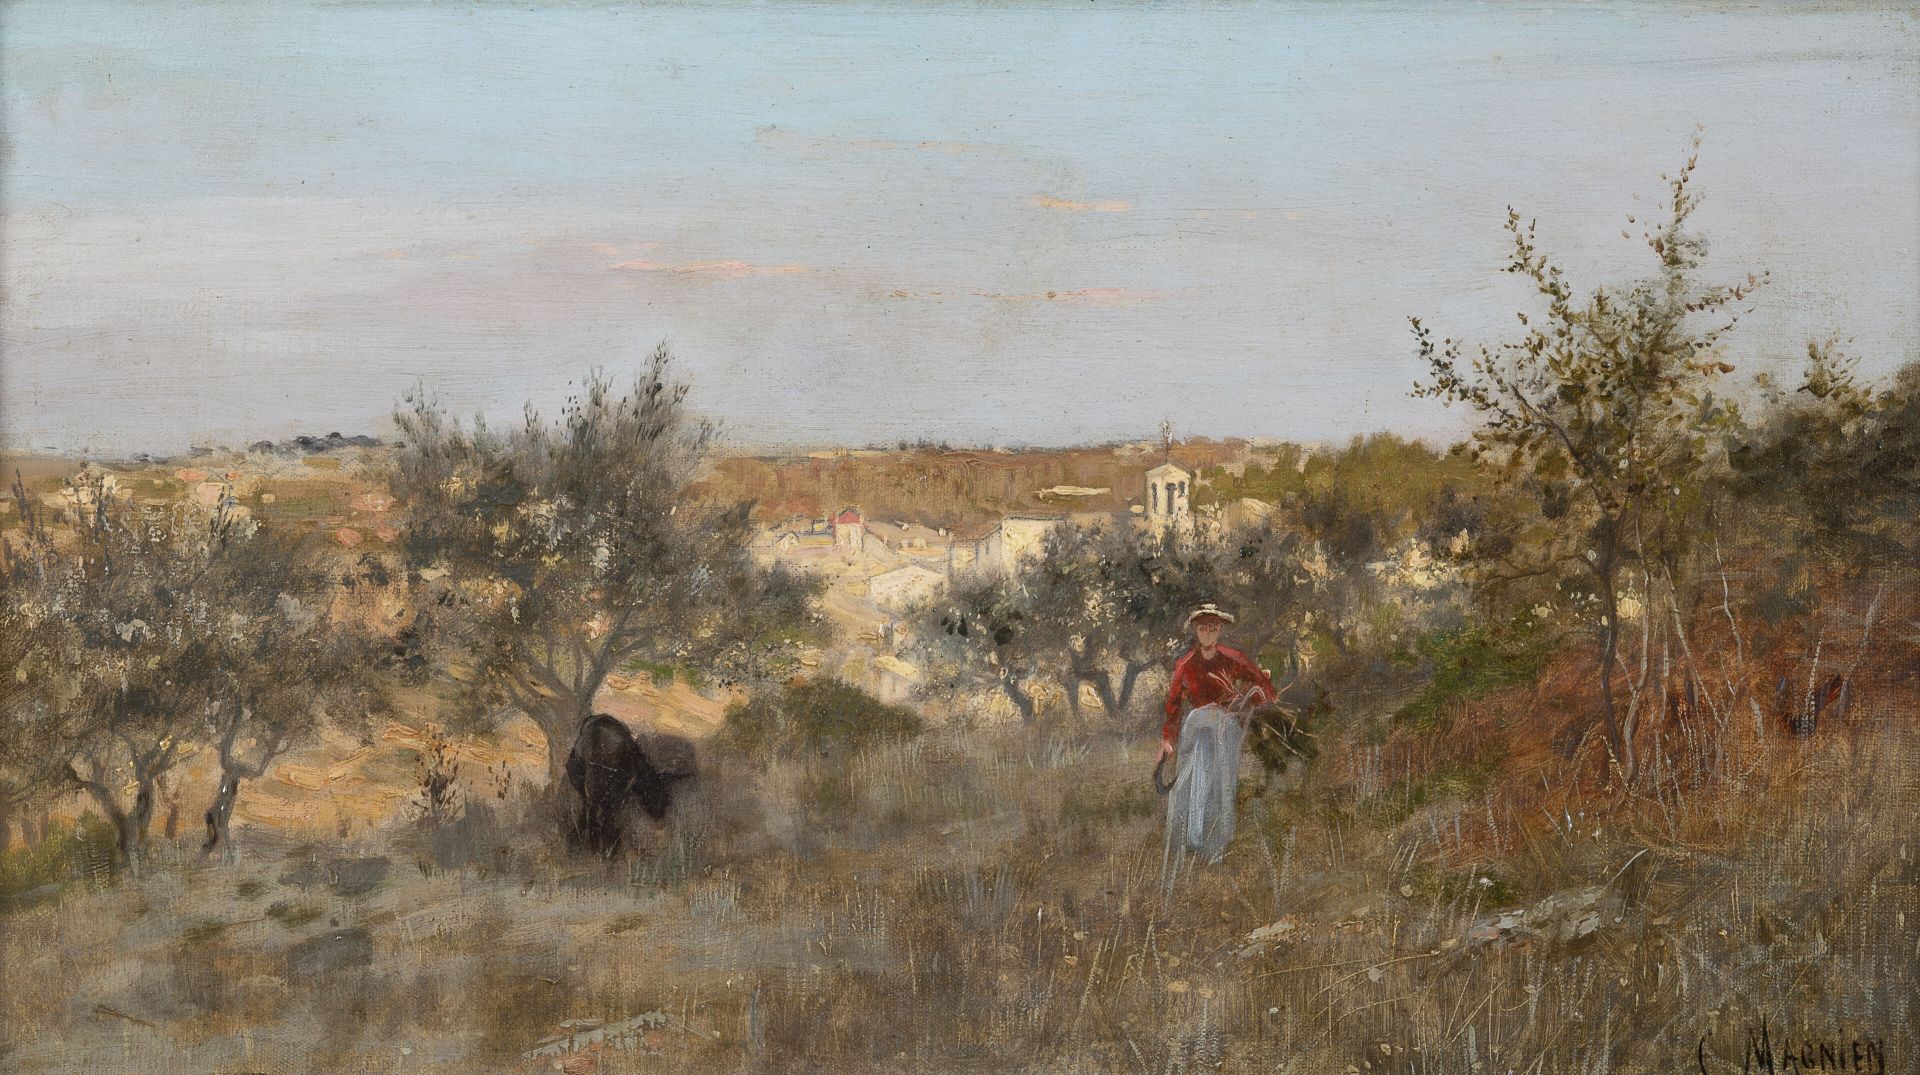 C. MAGNIEN (XIX-XXème siècle) Young woman with a mop in a southern landscape. 

&hellip;